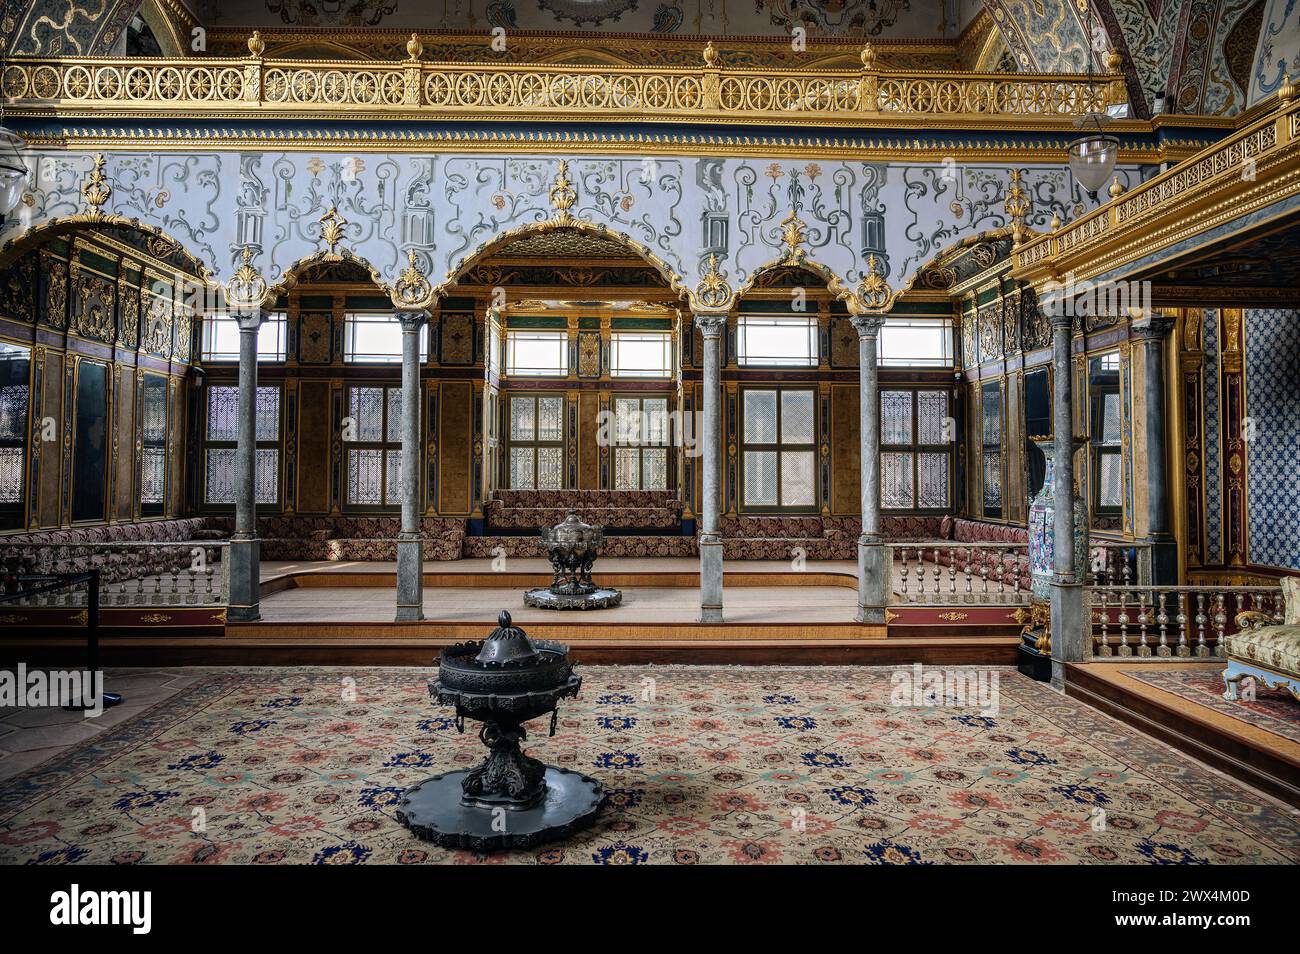 Sala Imperiale all'interno dell'Harem, Palazzo Topkapı, Istanbul, Turchia Foto Stock